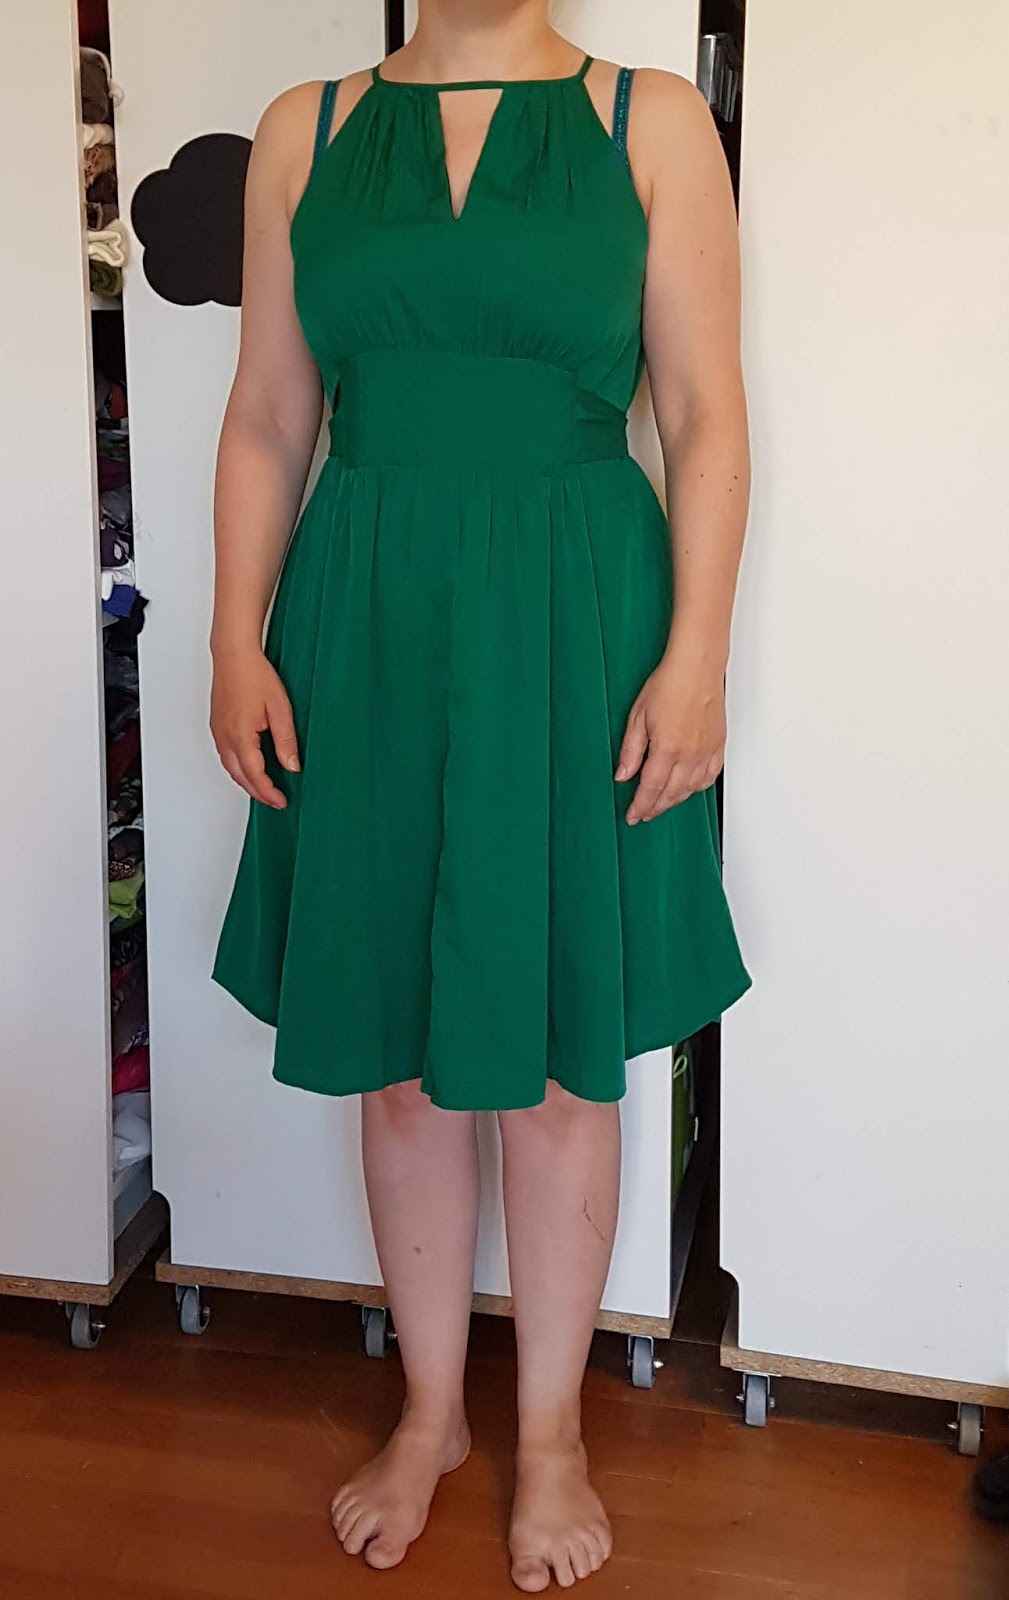 Smuk grøn kjole – minus stram halsåbning | Saga i farver – Saga in